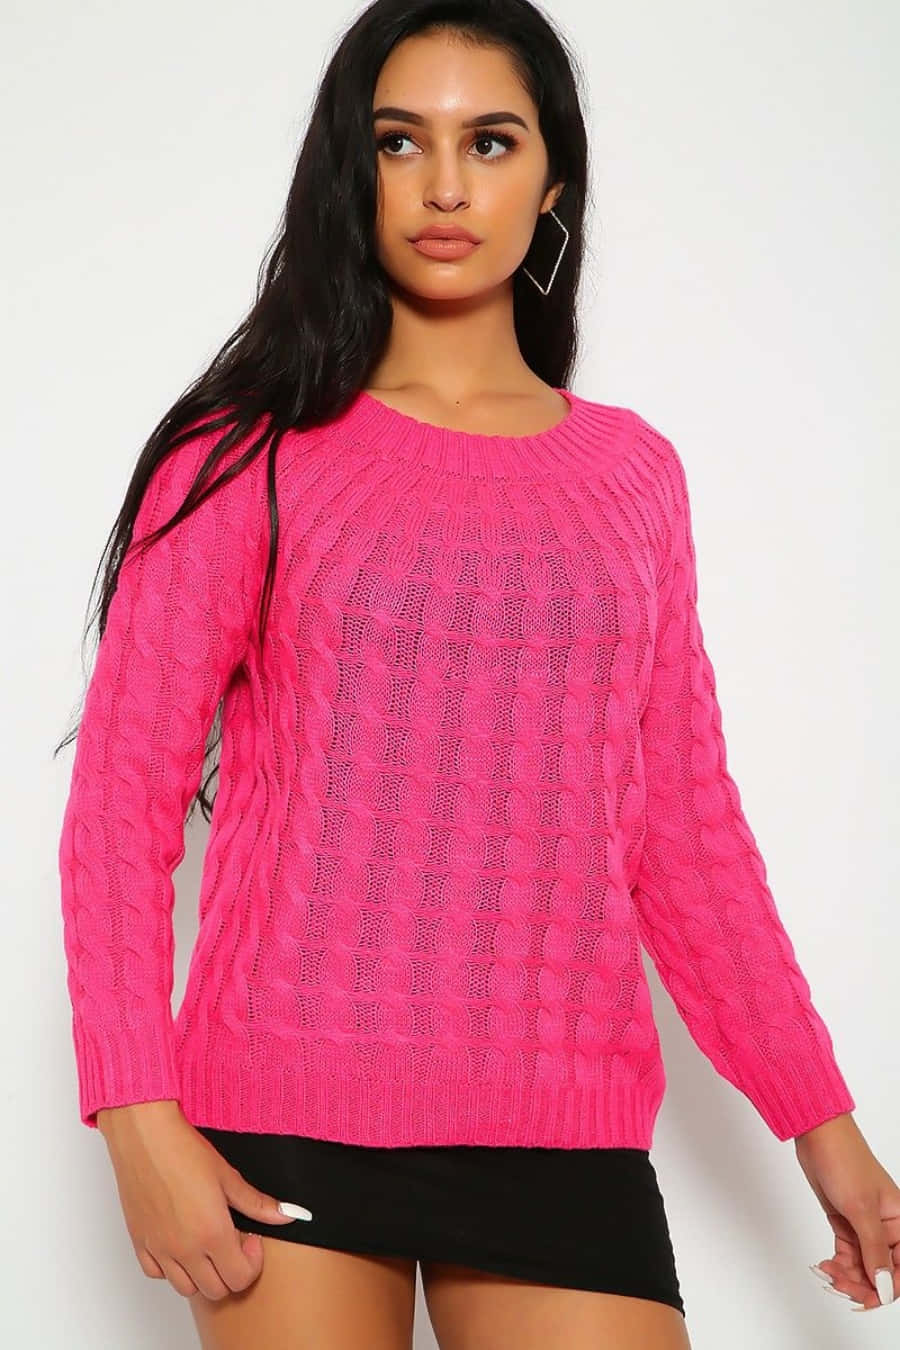 Stylish Woman Wearing a Cozy Pink Sweater Wallpaper